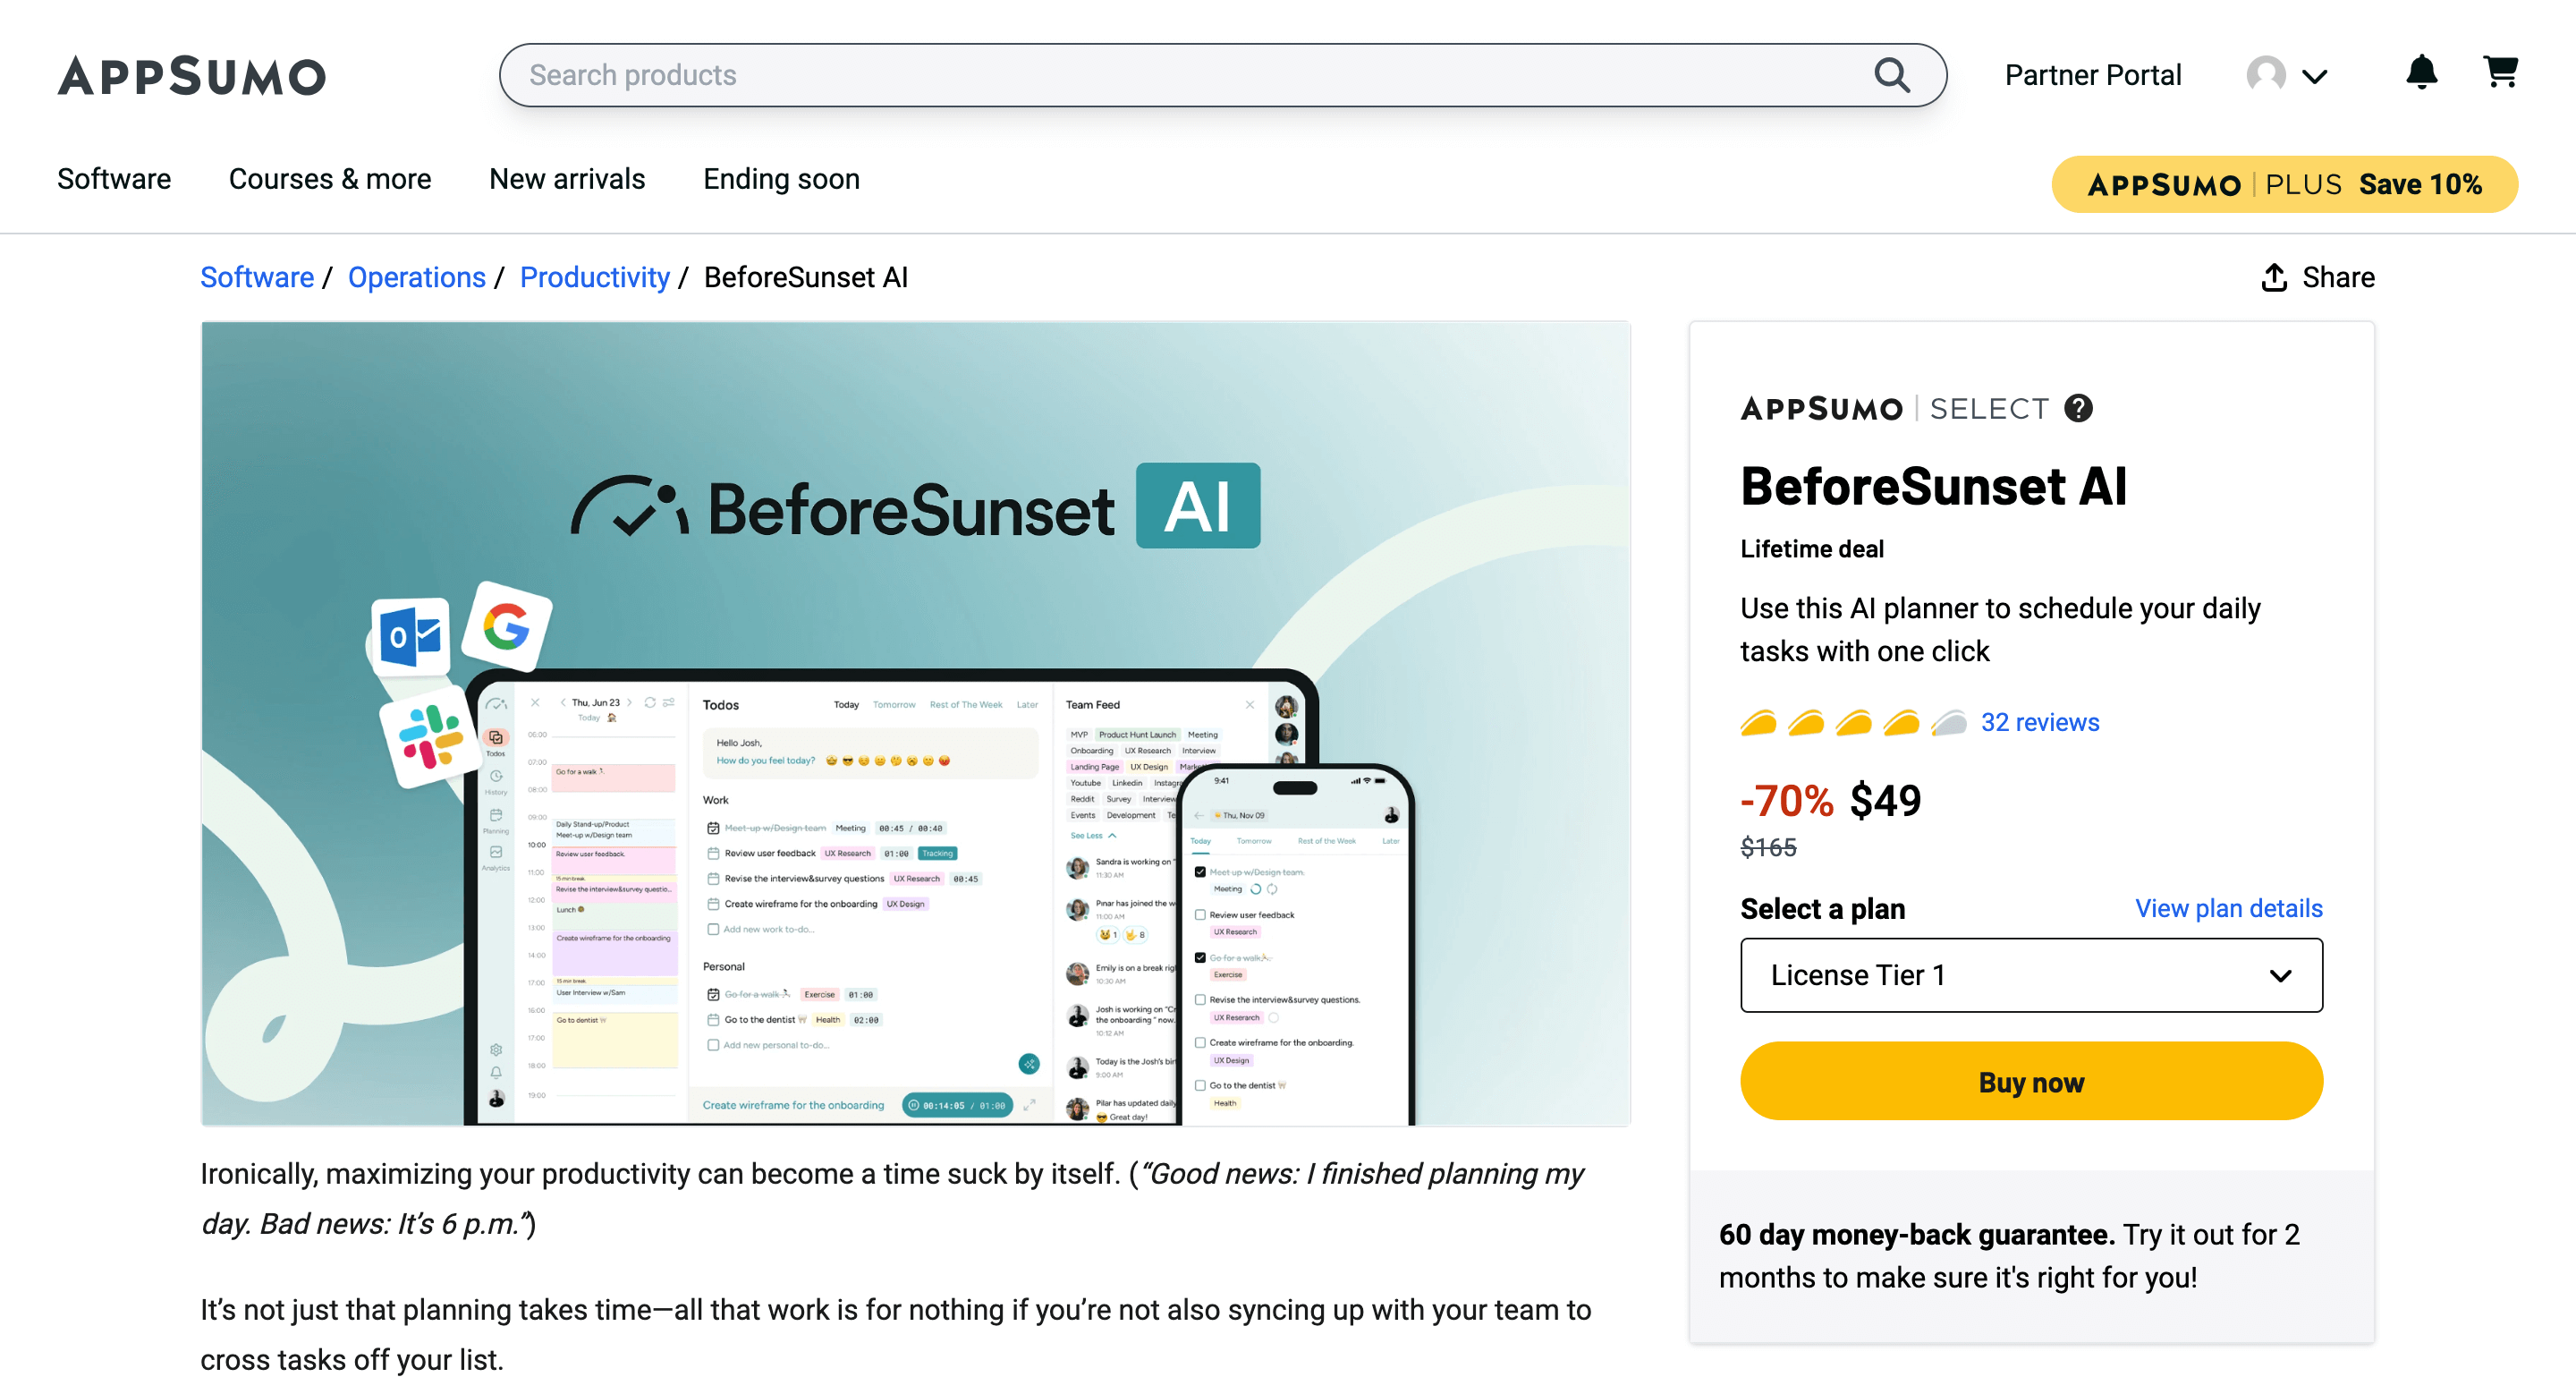 BeforeSunset AI Appsumo deal